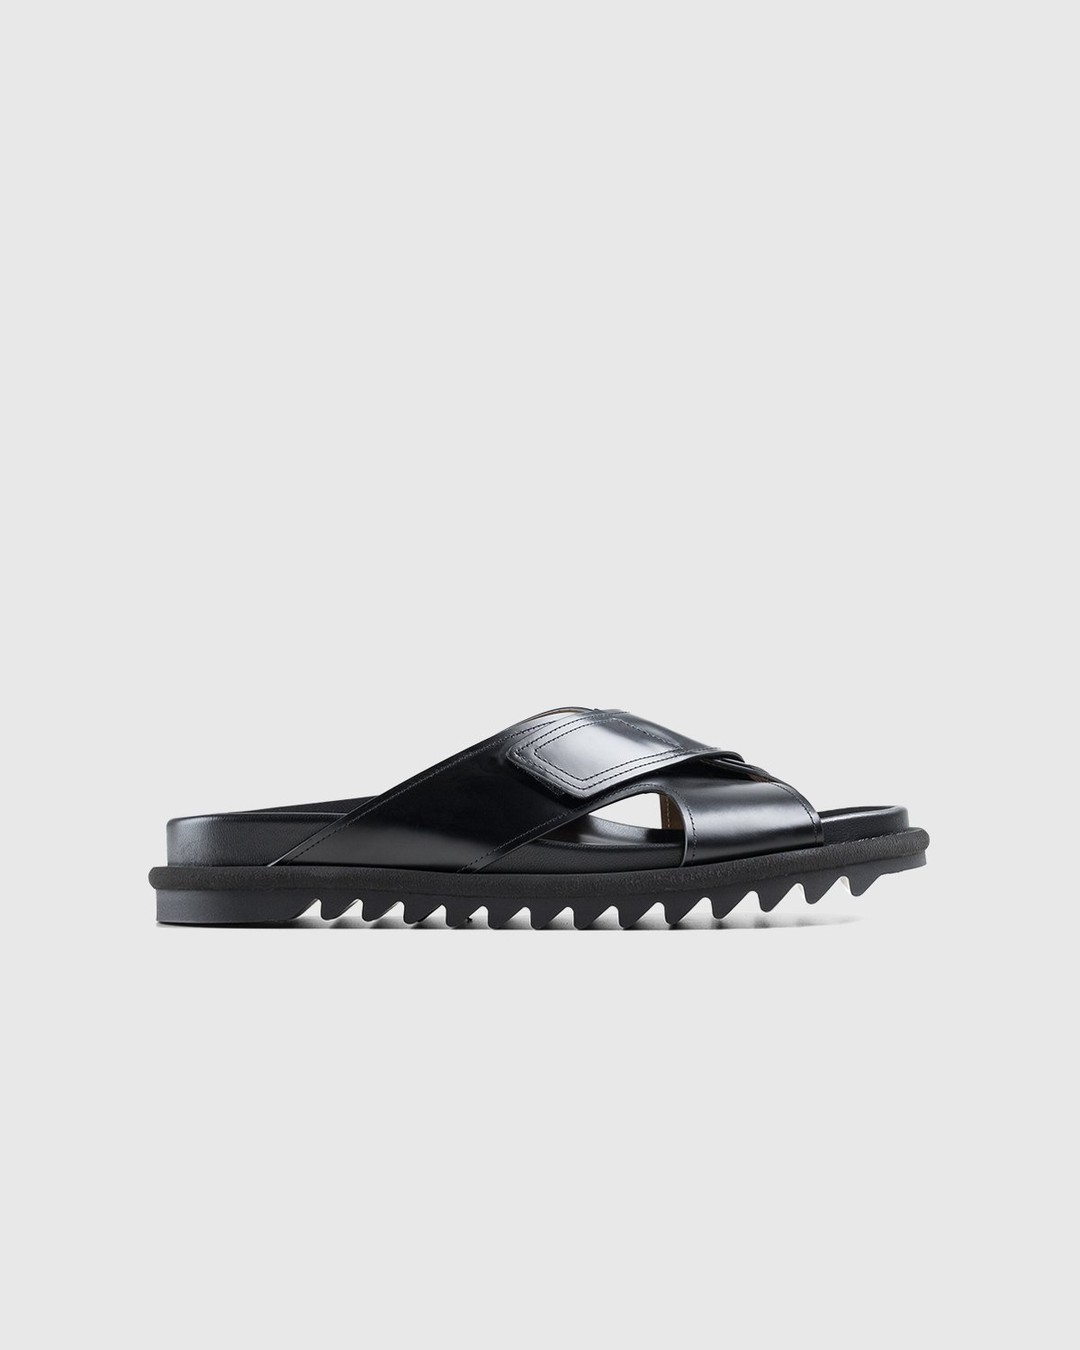 Dries van Noten – Leather Criss-Cross Sandals Black - Sandals & Slides - Black - Image 1